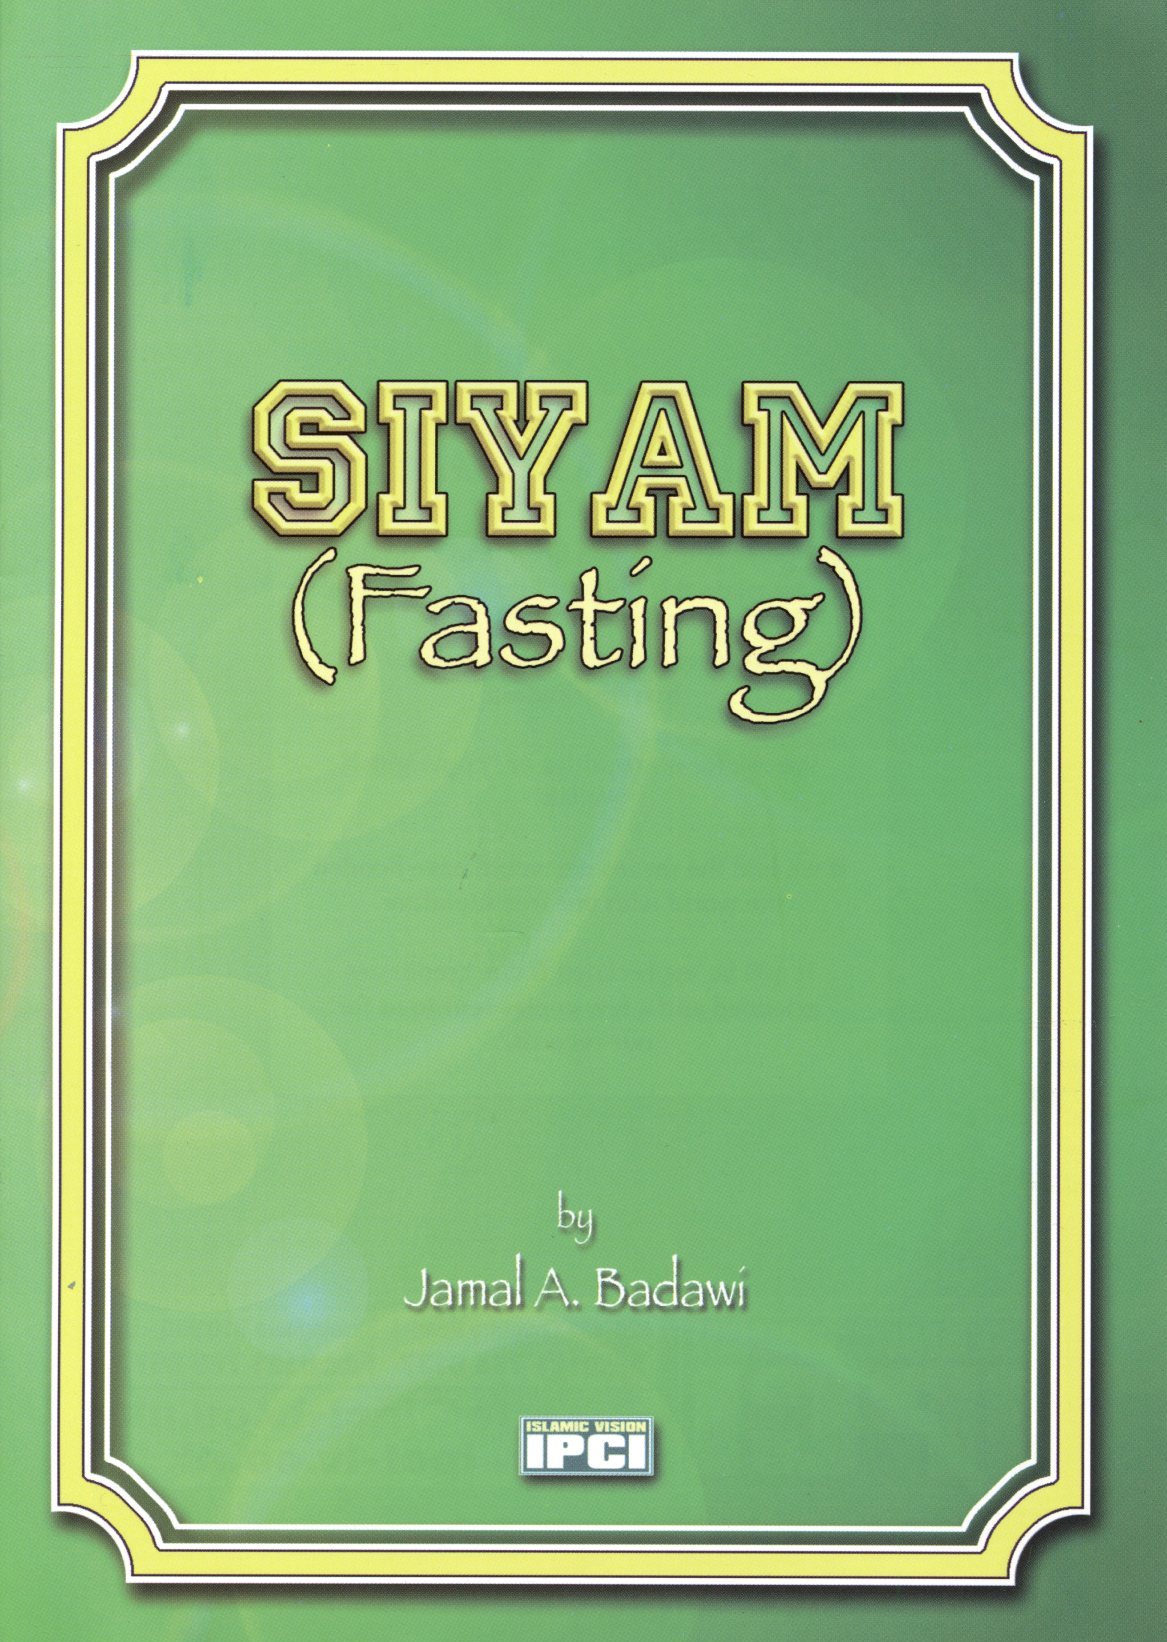 SIYAM (Fasting)